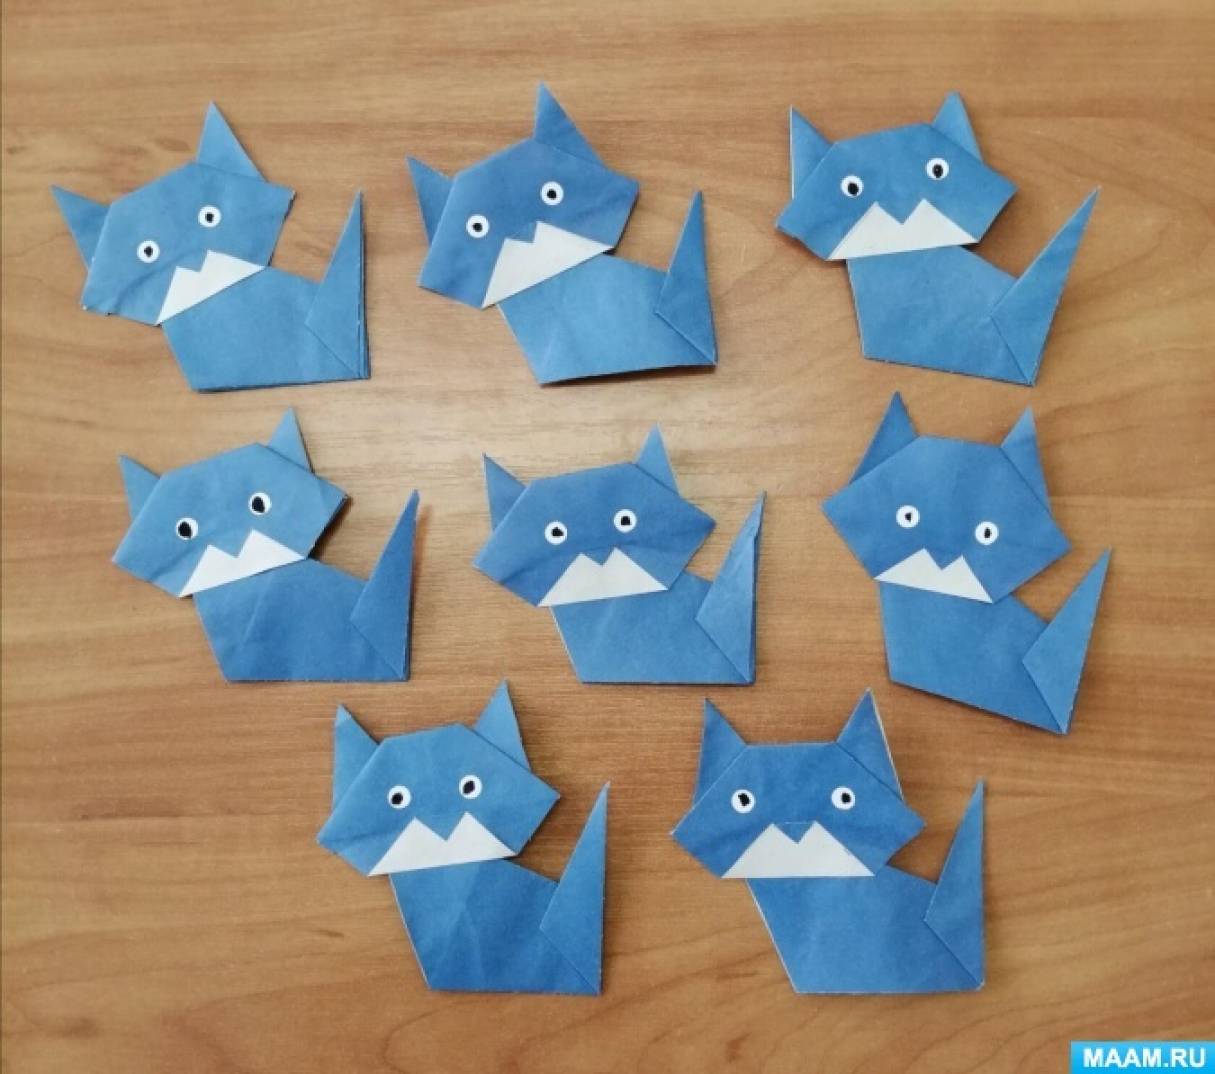 Top 10 оригами кошка ideas and inspiration